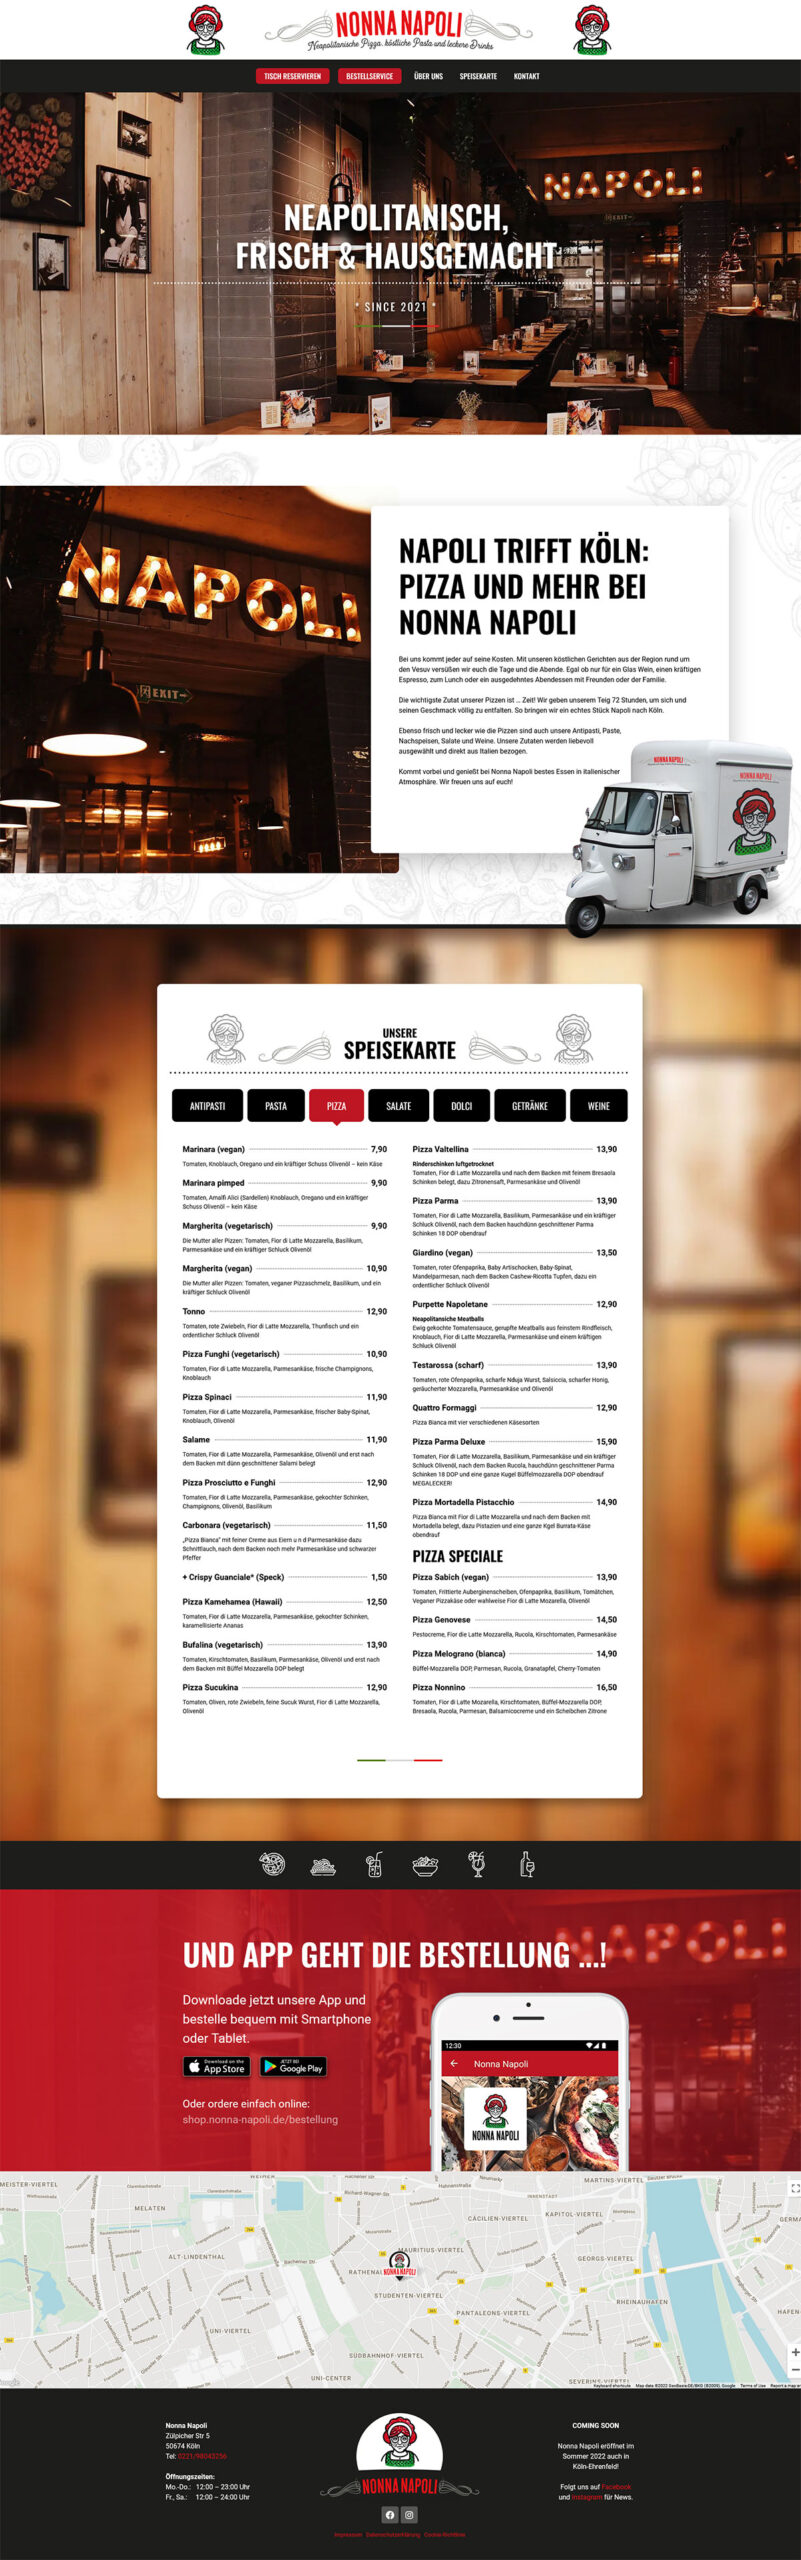 Webdesign Pizzeria-Homepage Referenz